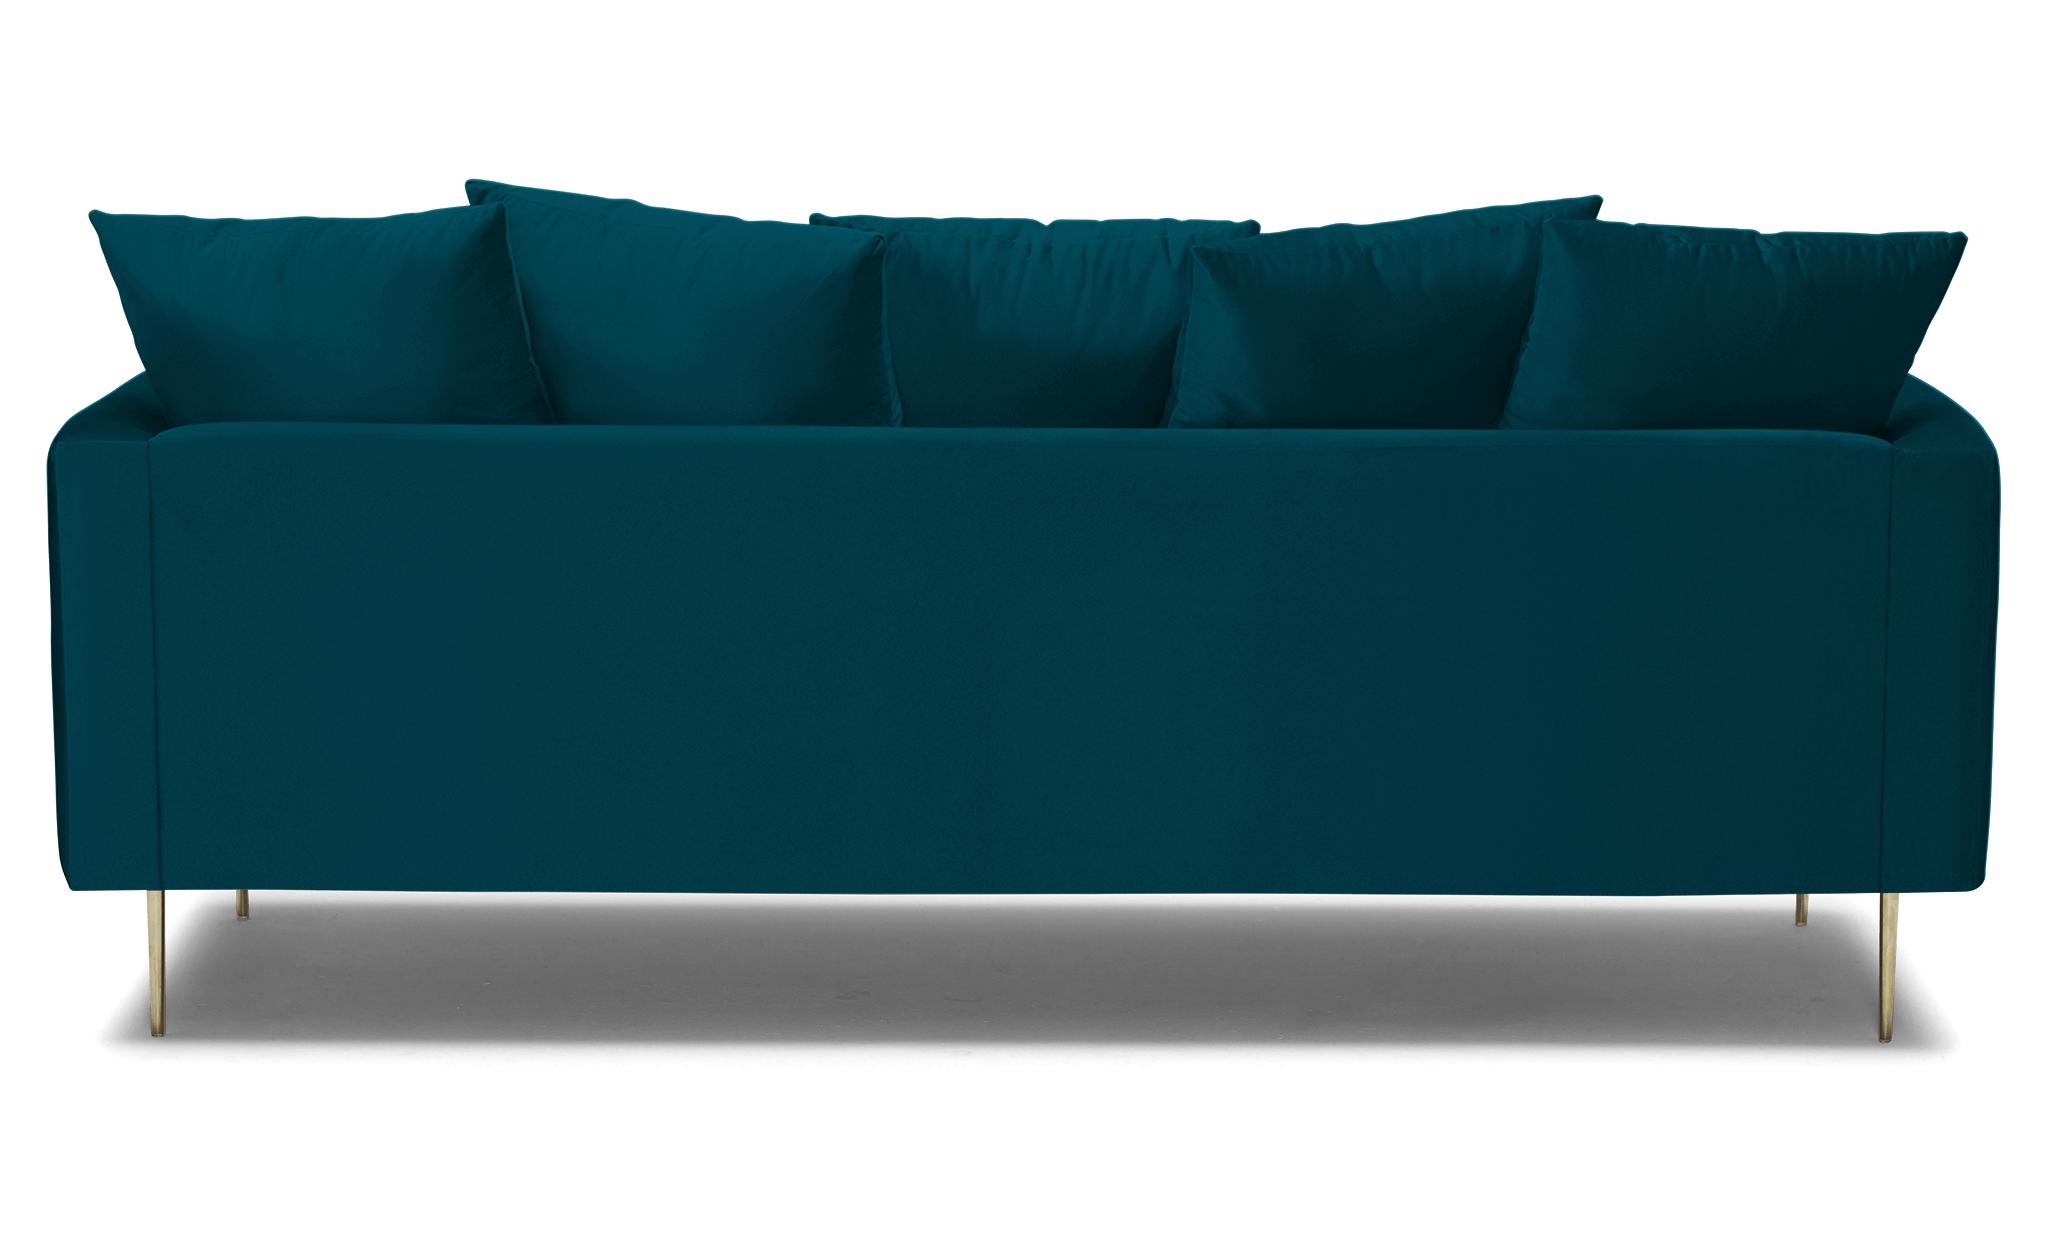 Blue Aime Mid Century Modern Sofa - Key Largo Zenith Teal - Image 4